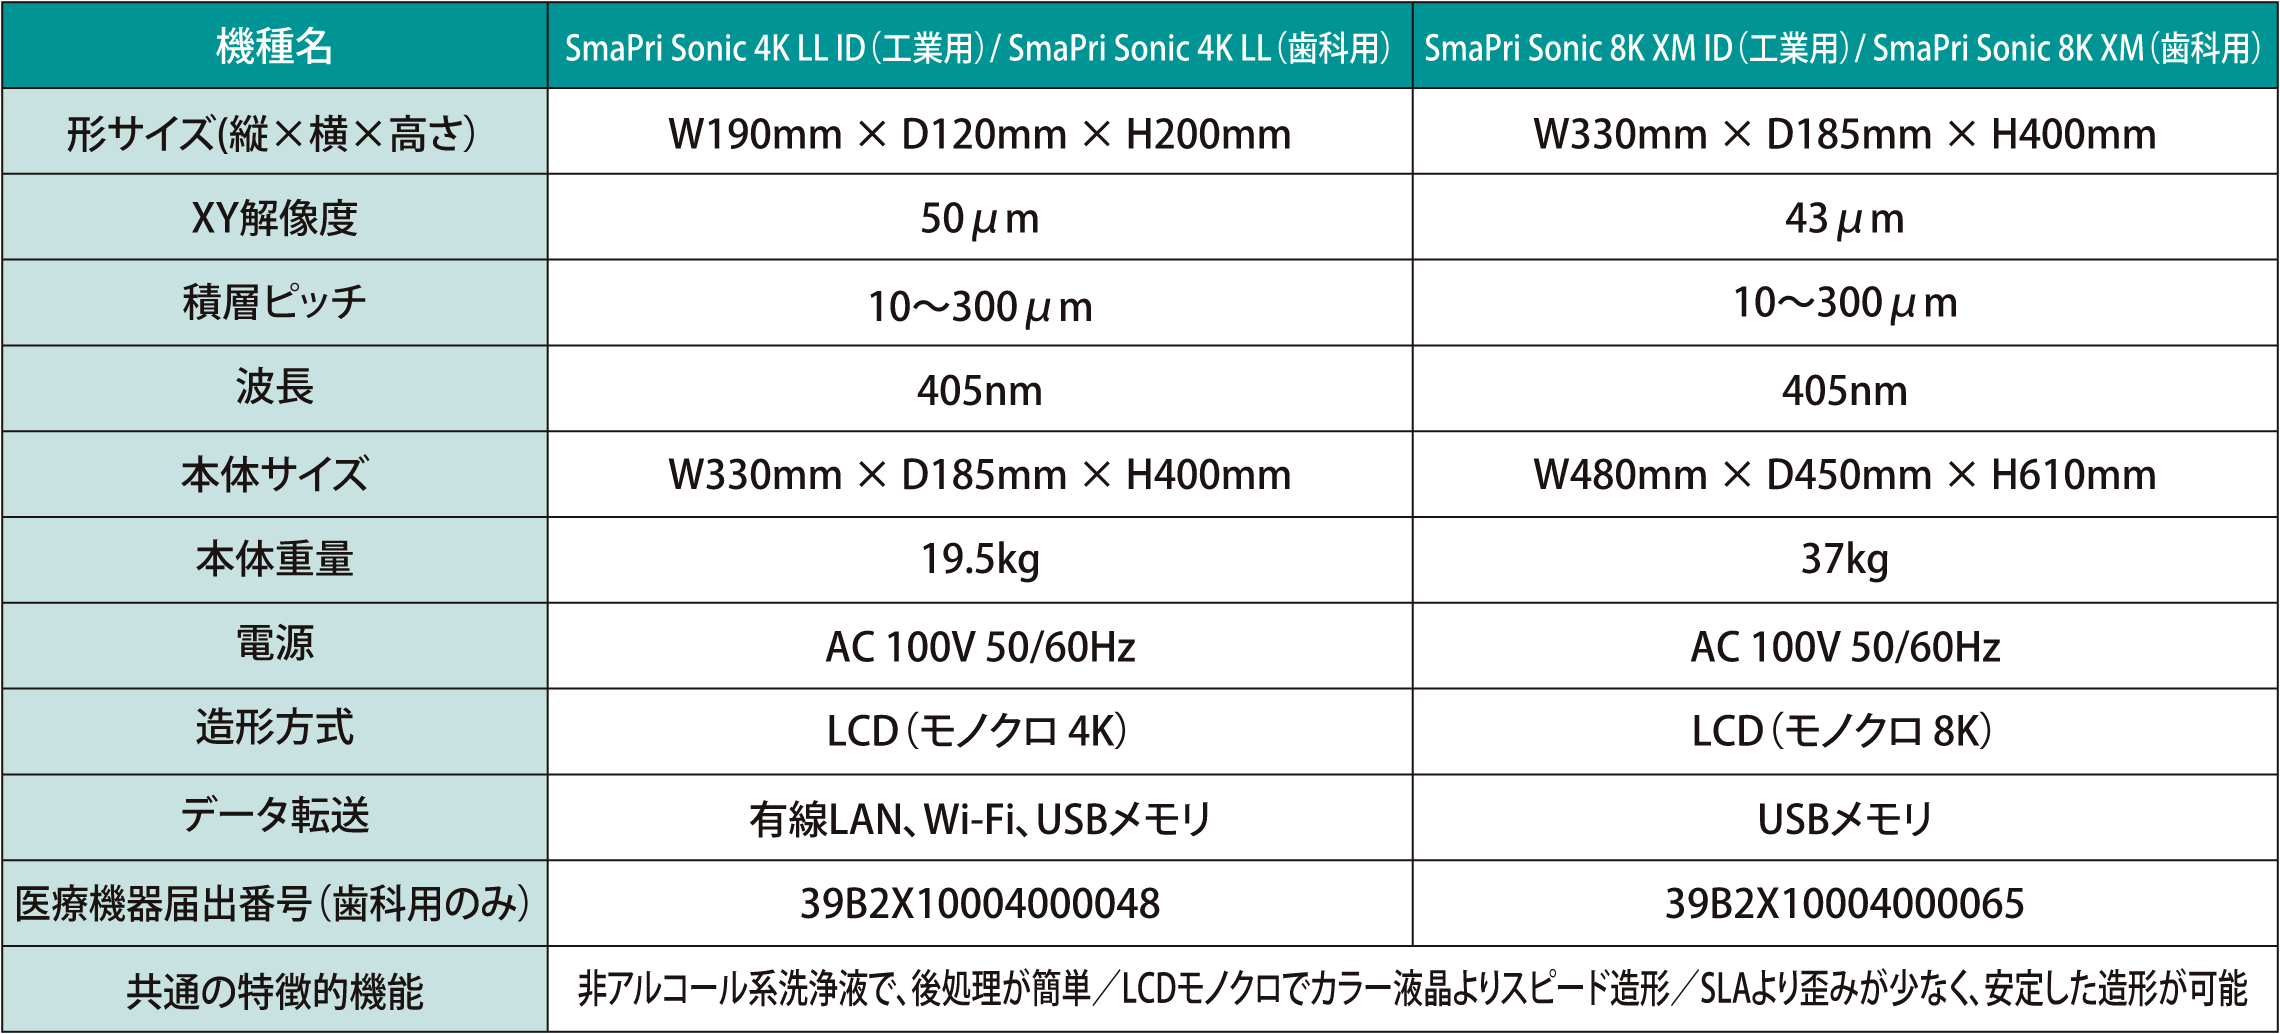 SmaPri Sonic 8K XM 16